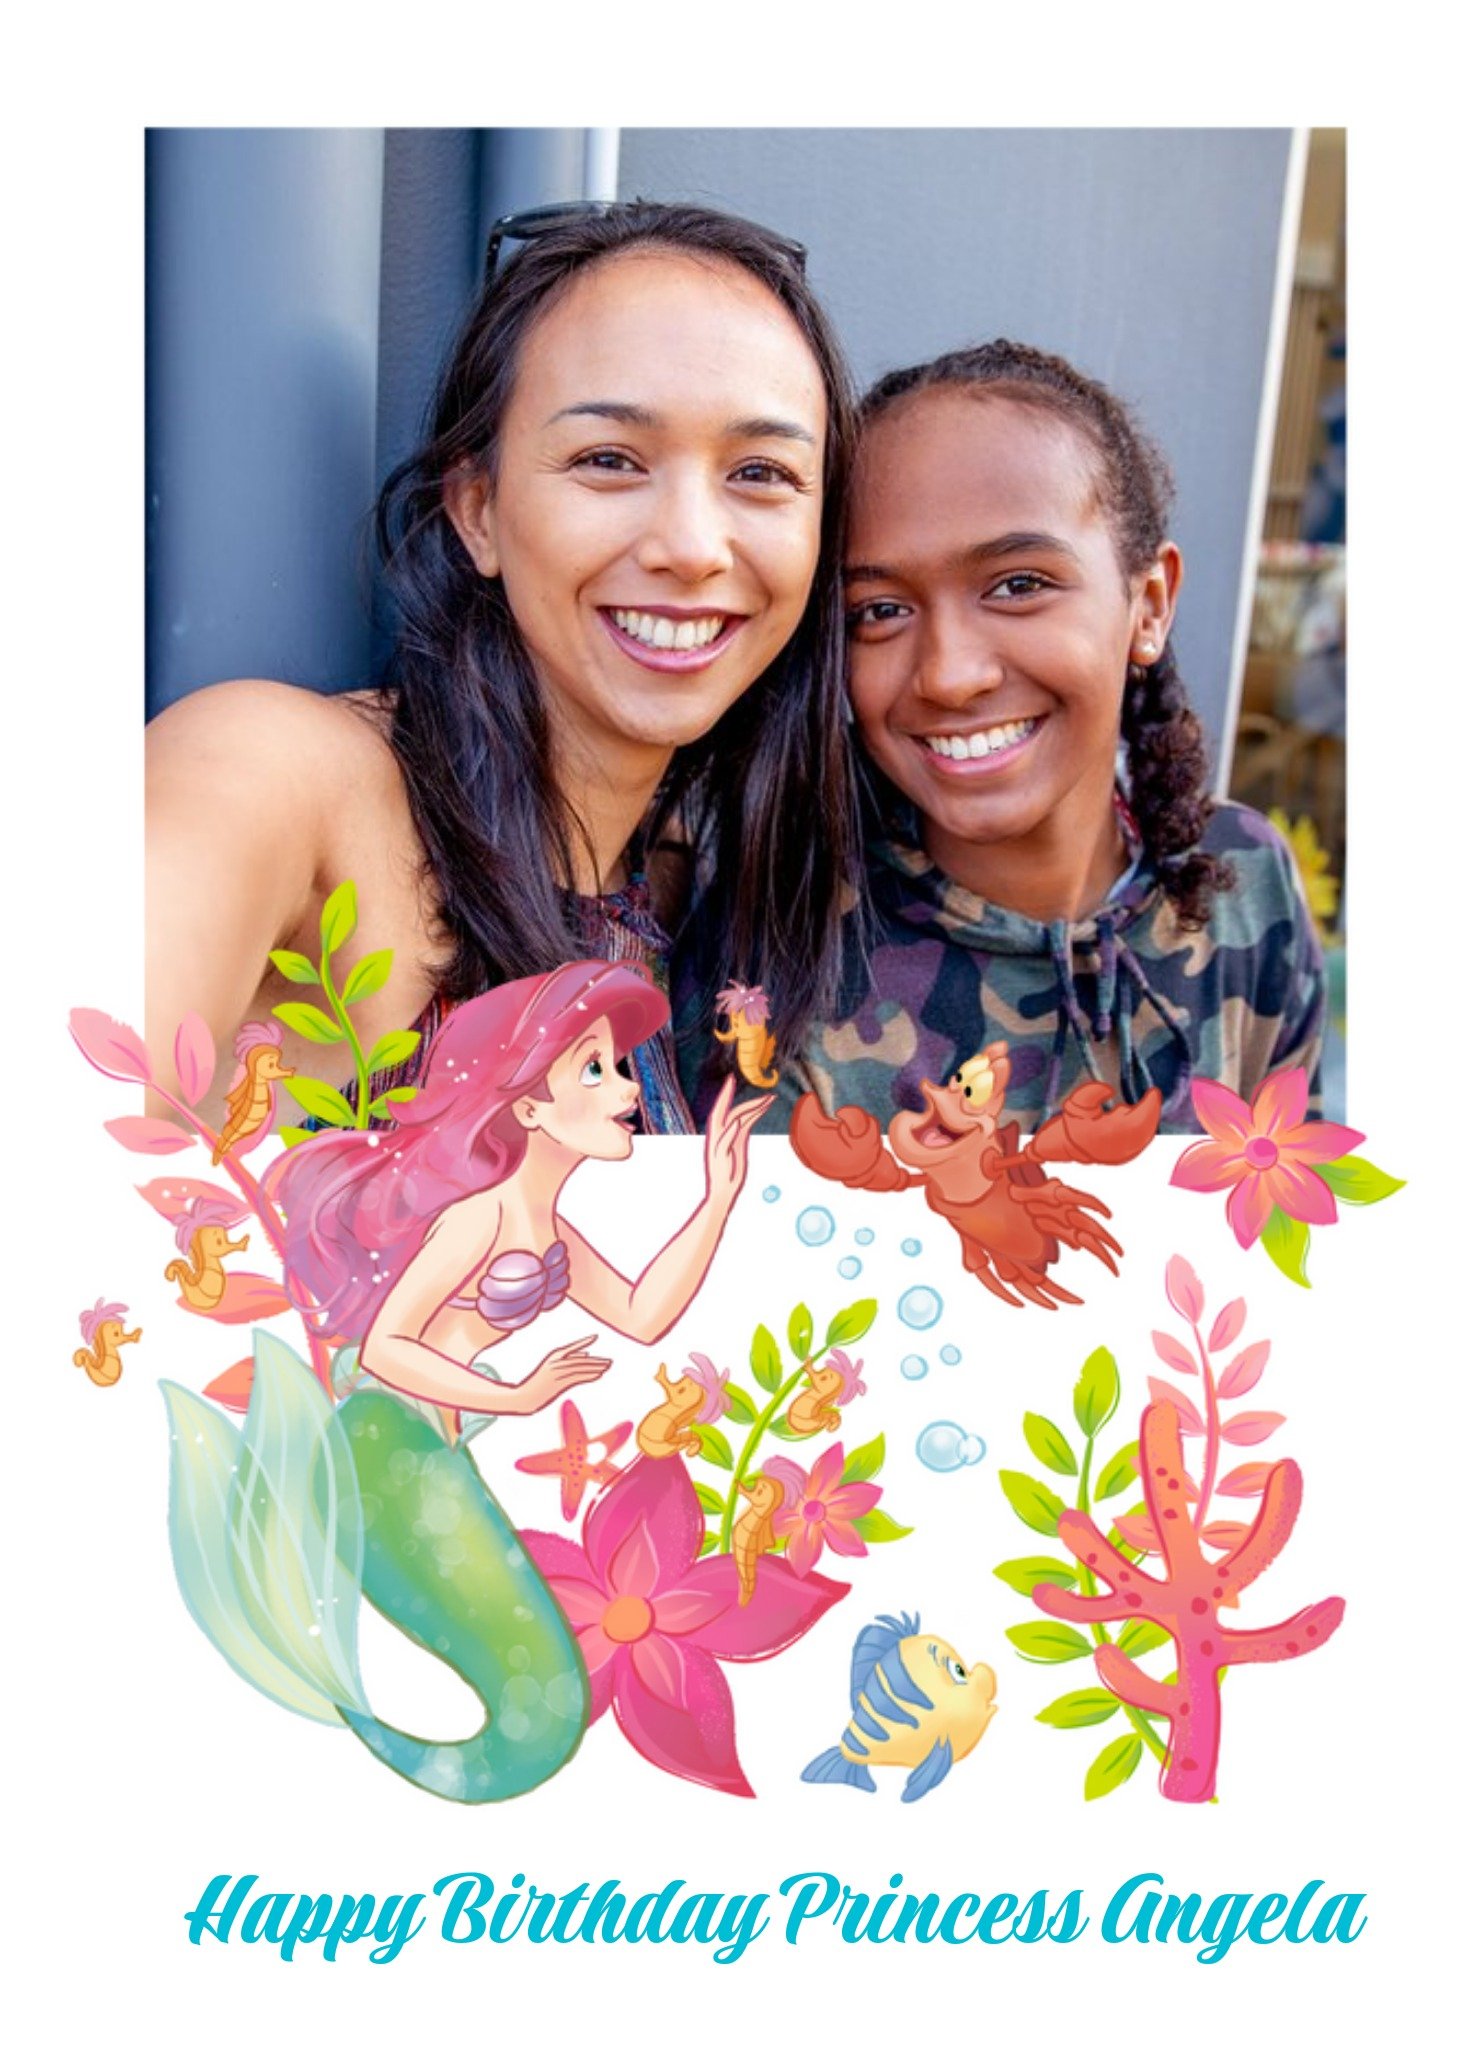 Disney Princesses Disney Princess The Little Mermaid Photo Upload Birthday Card Ecard